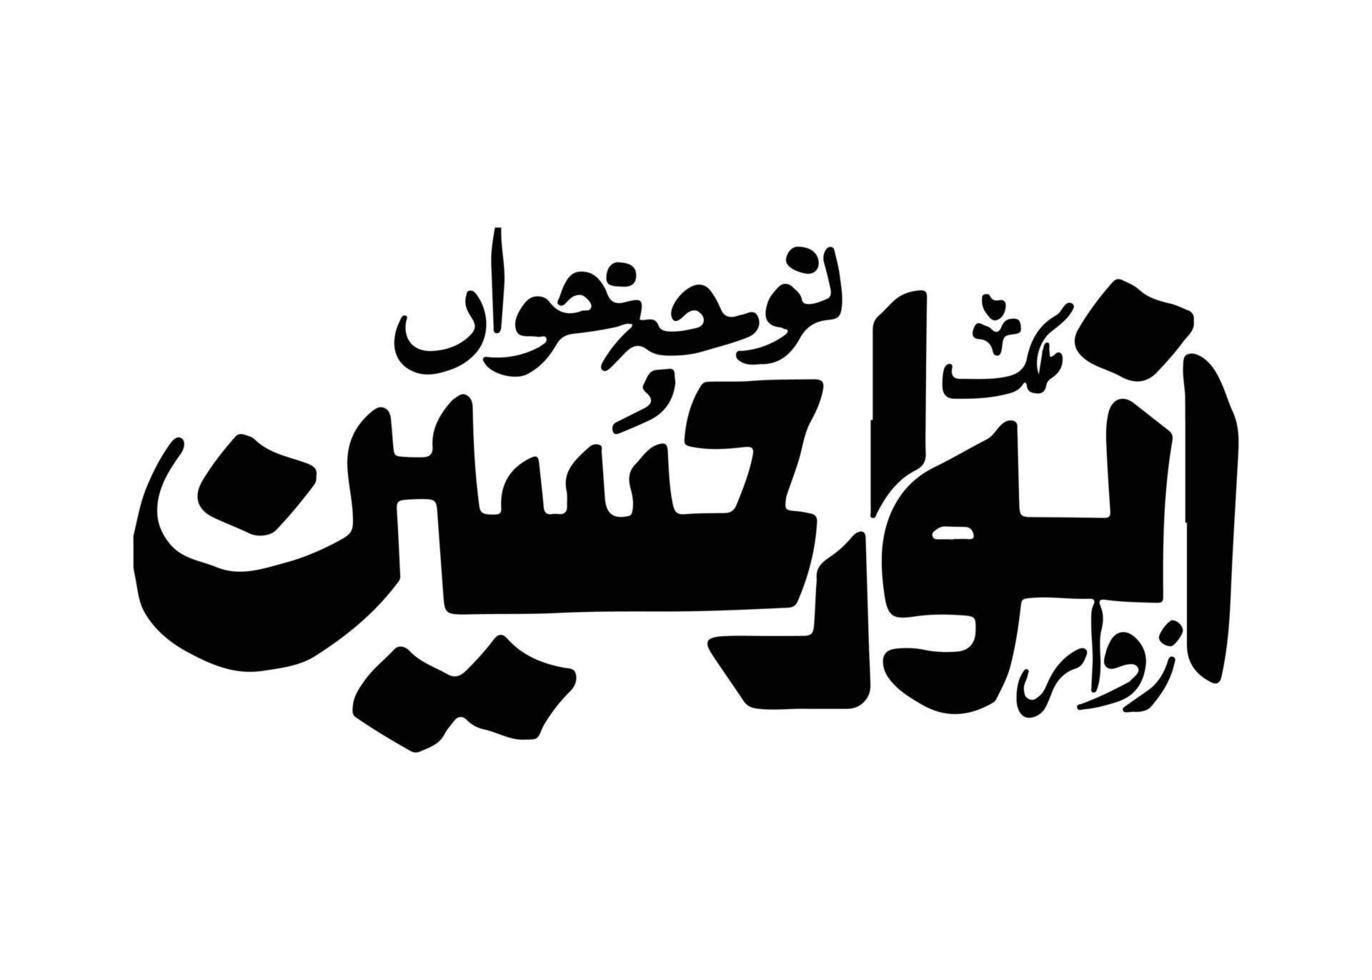 noha khan anwar hussain zawar caligrafía árabe islámica vector libre